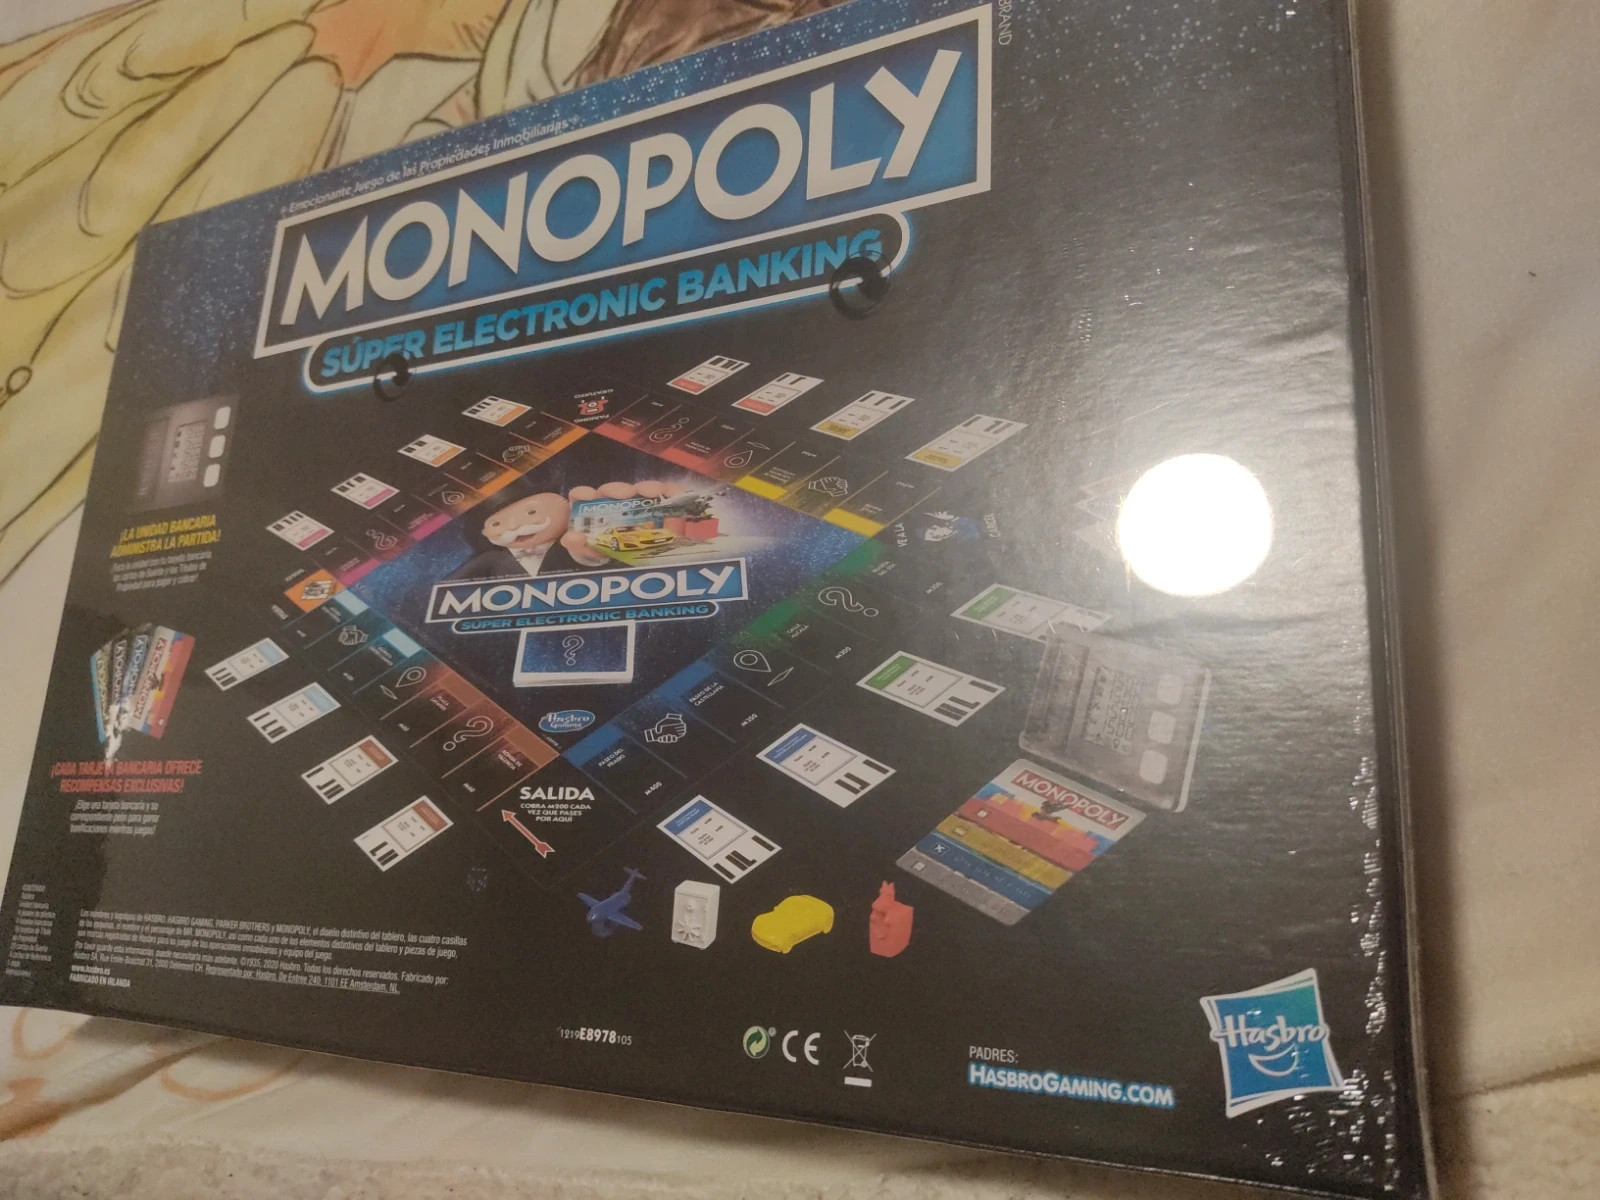 Monopoly super electronic banking sellado sin abrir juego de mesa Monopoly